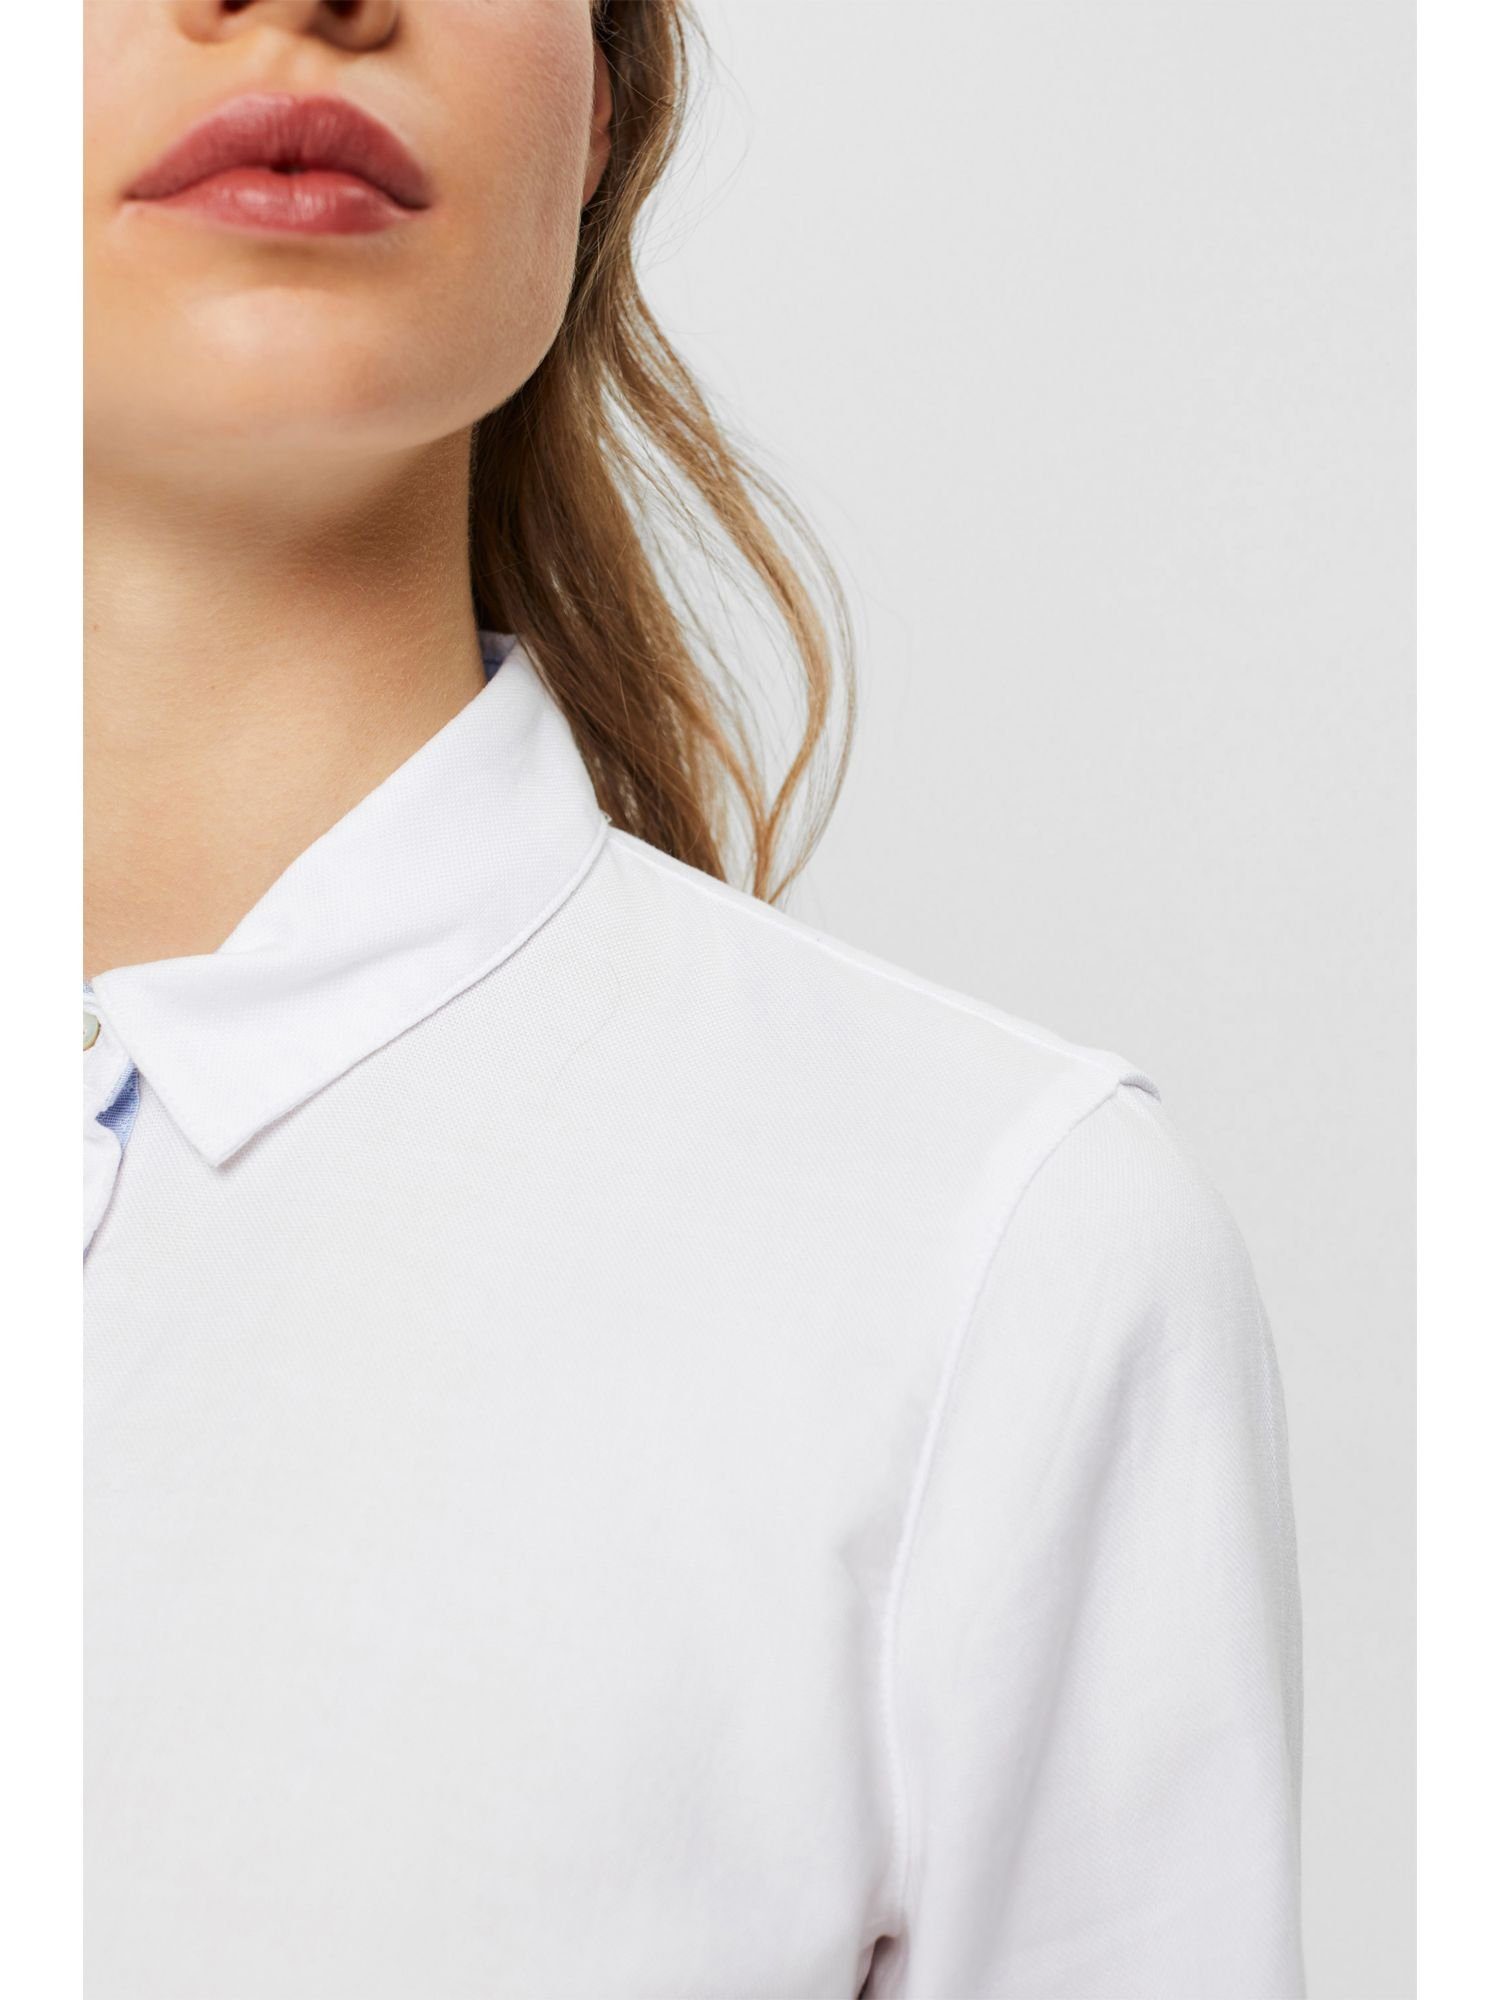 Esprit Langarmbluse Baumwolle WHITE 100% Hemd-Bluse aus